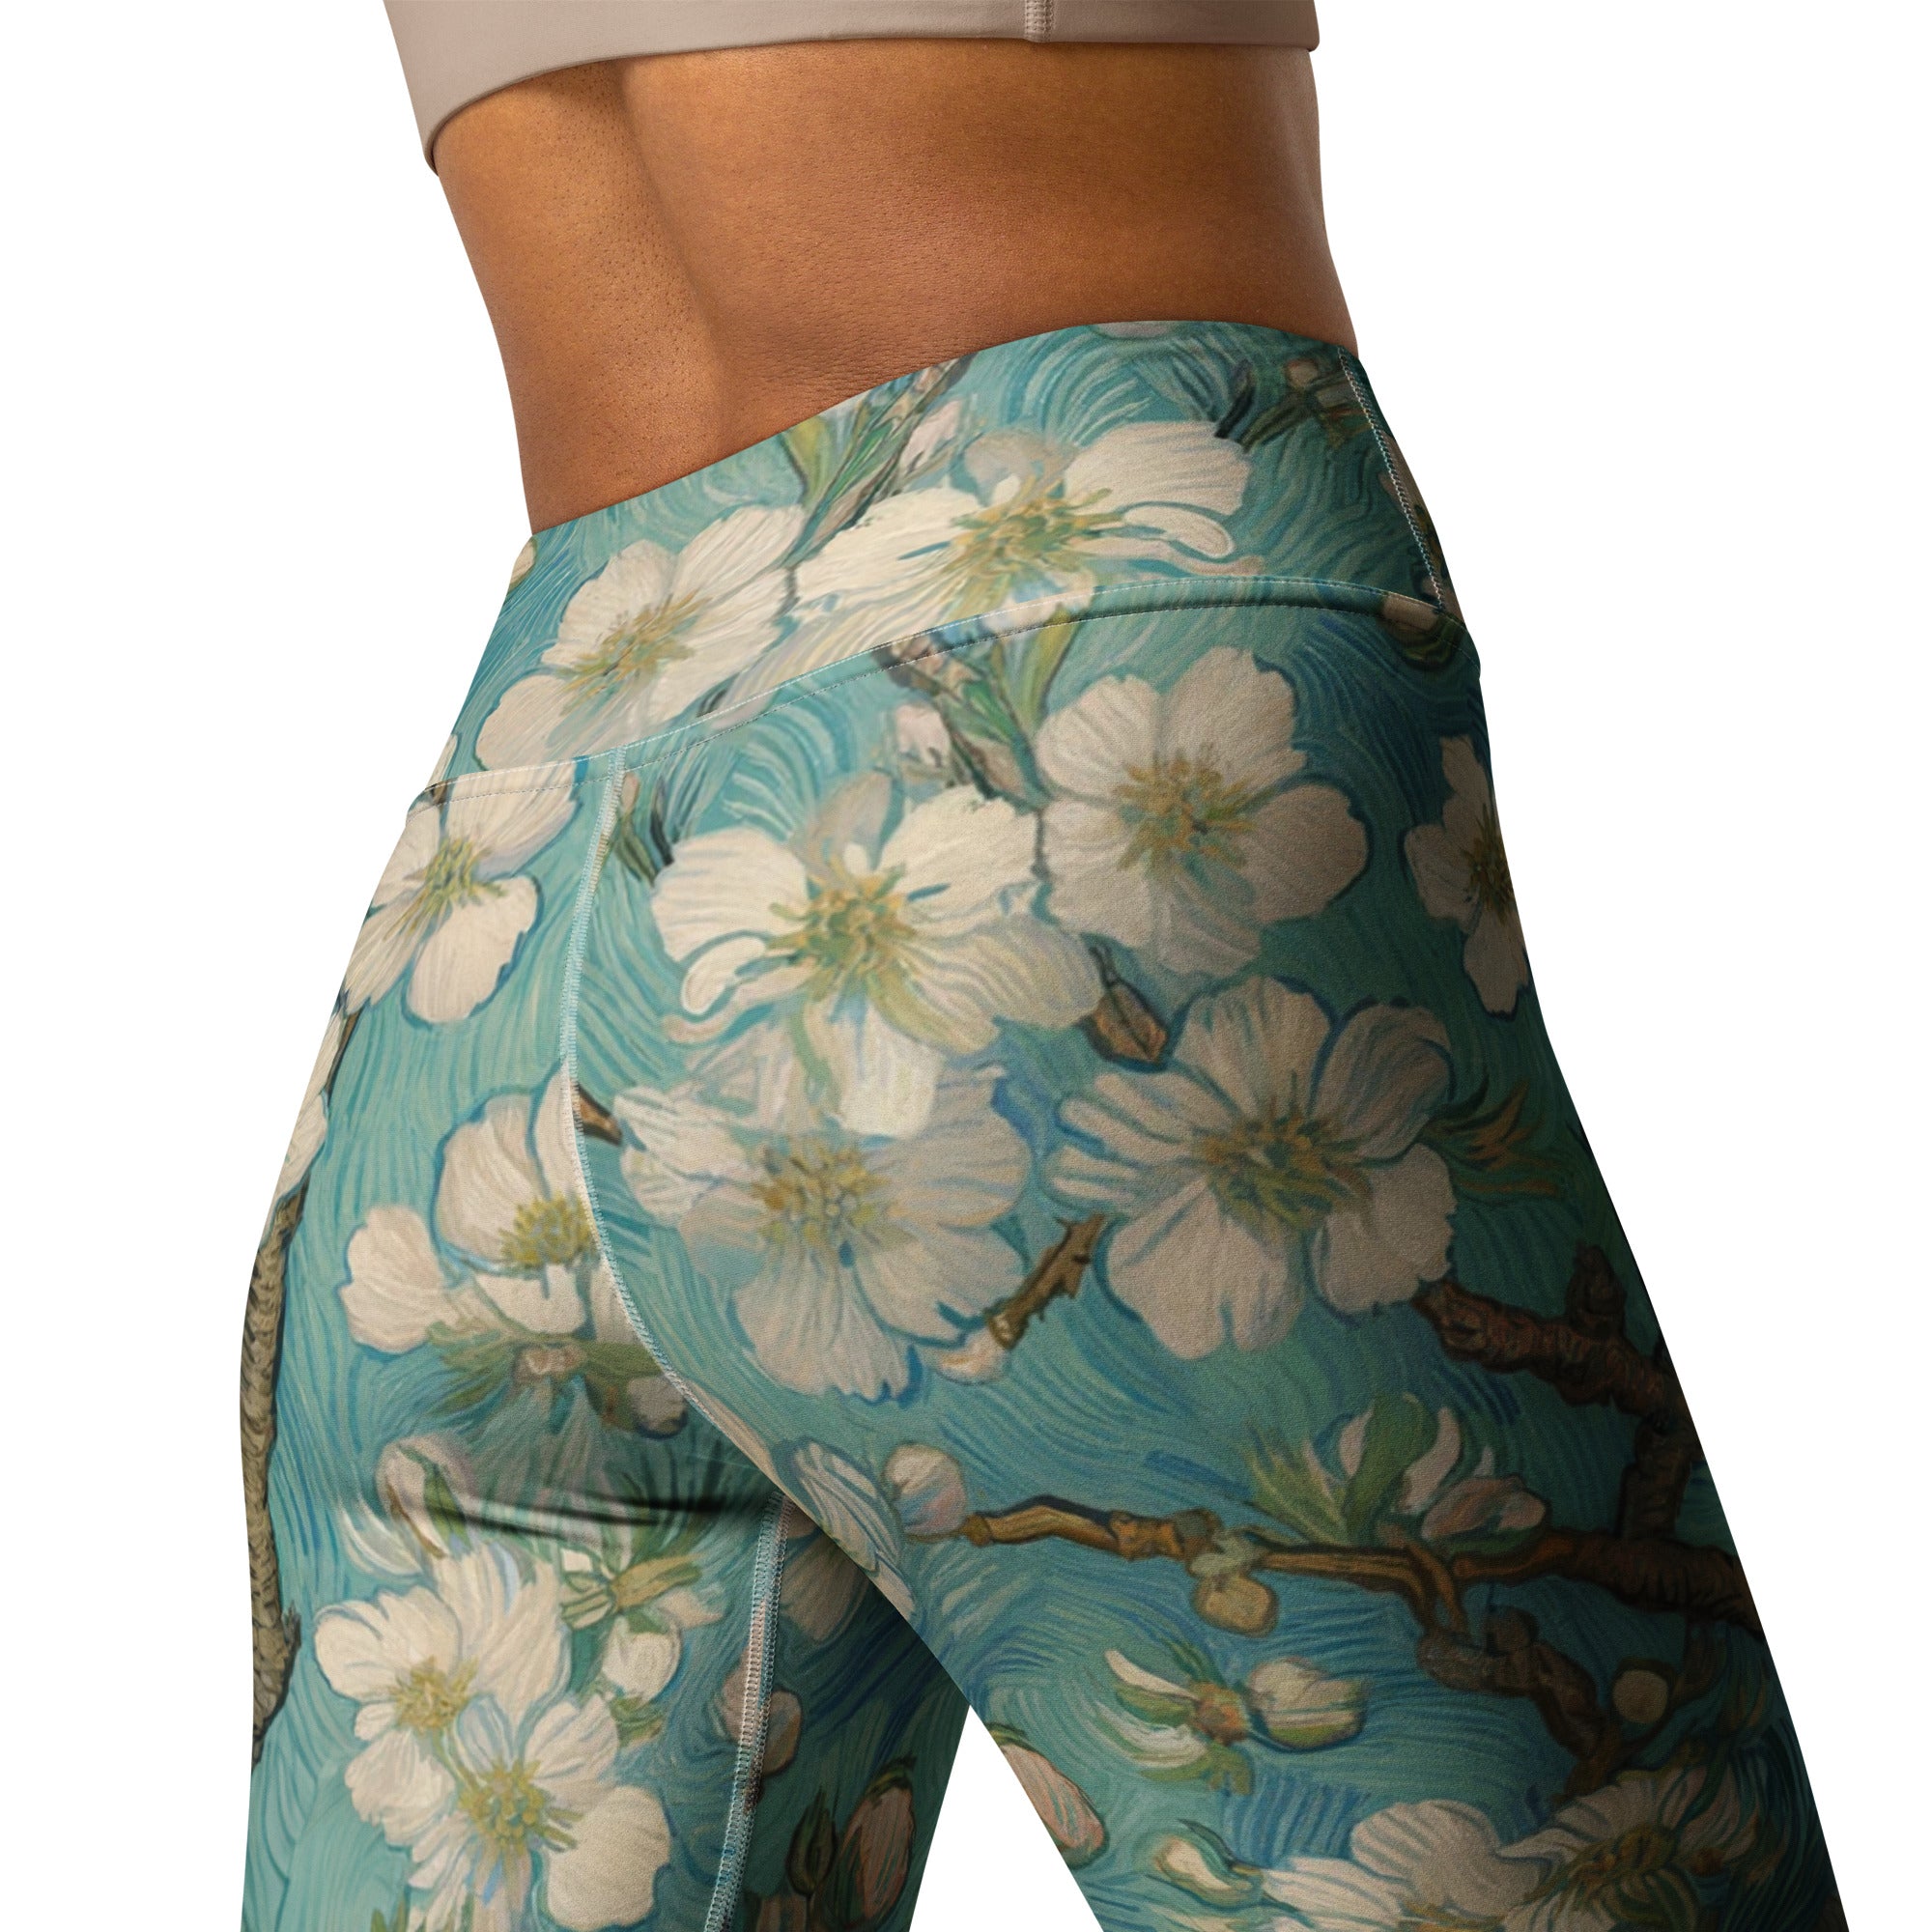 Vincent van Gogh 'Almond Blossom' Famous Painting Yoga Leggings | Premium Art Yoga Leggings